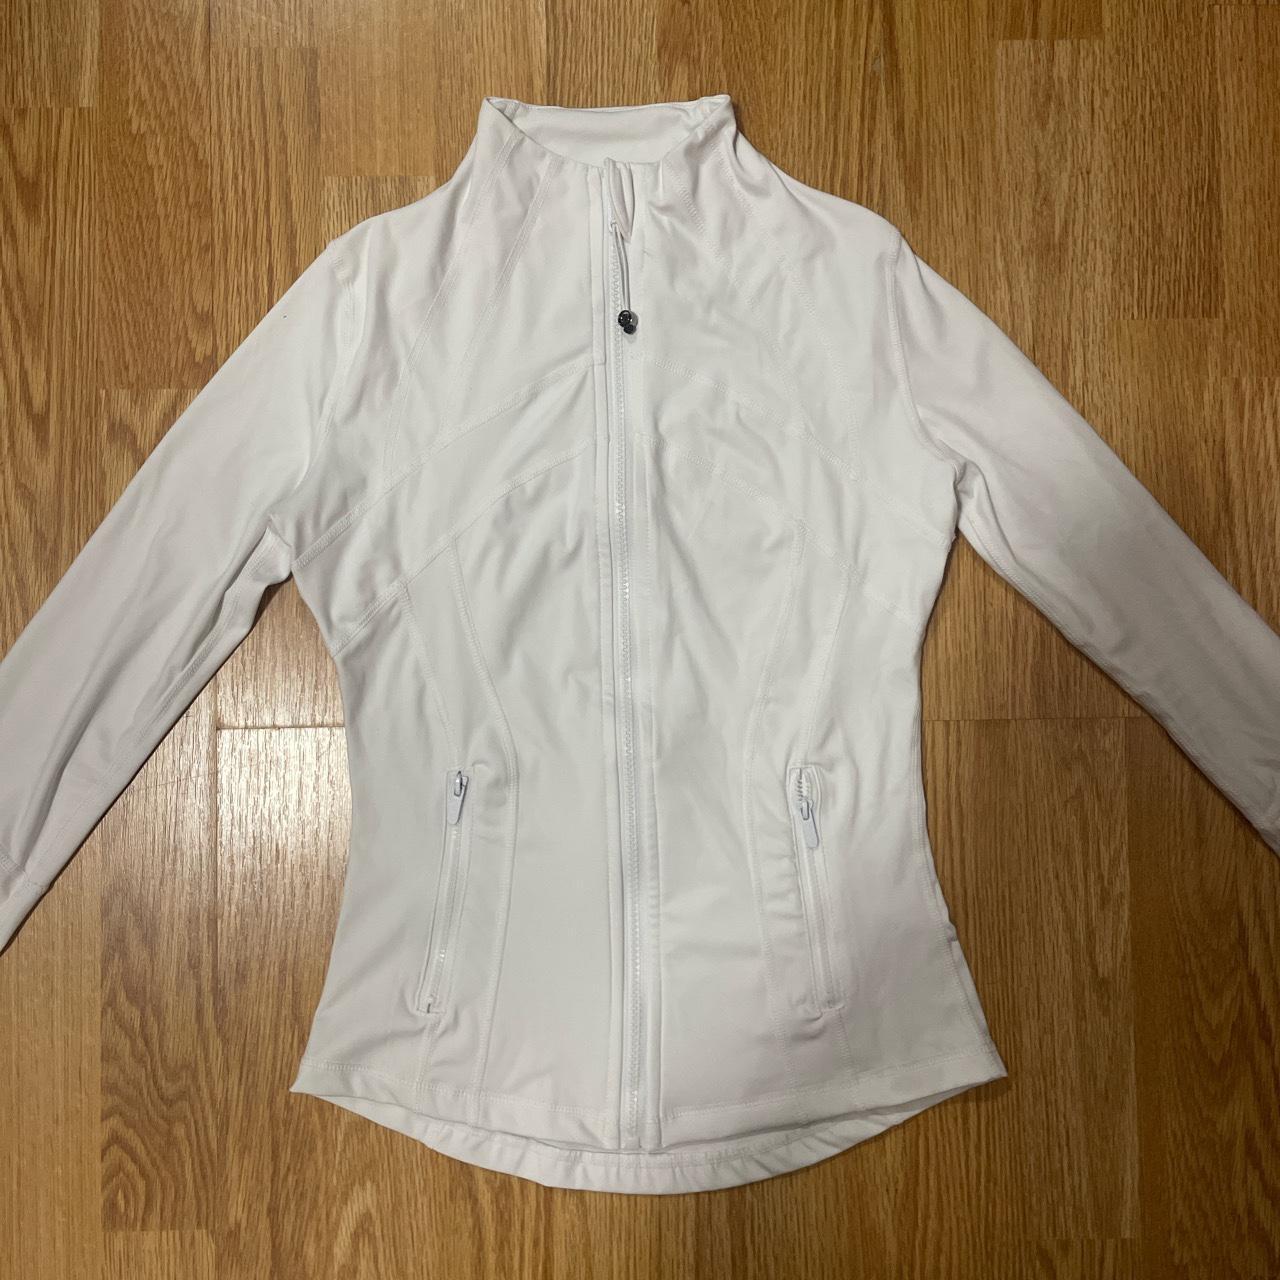 lulu lemon define jacket ❤️❤️ size 4❤️❤️ willing to - Depop